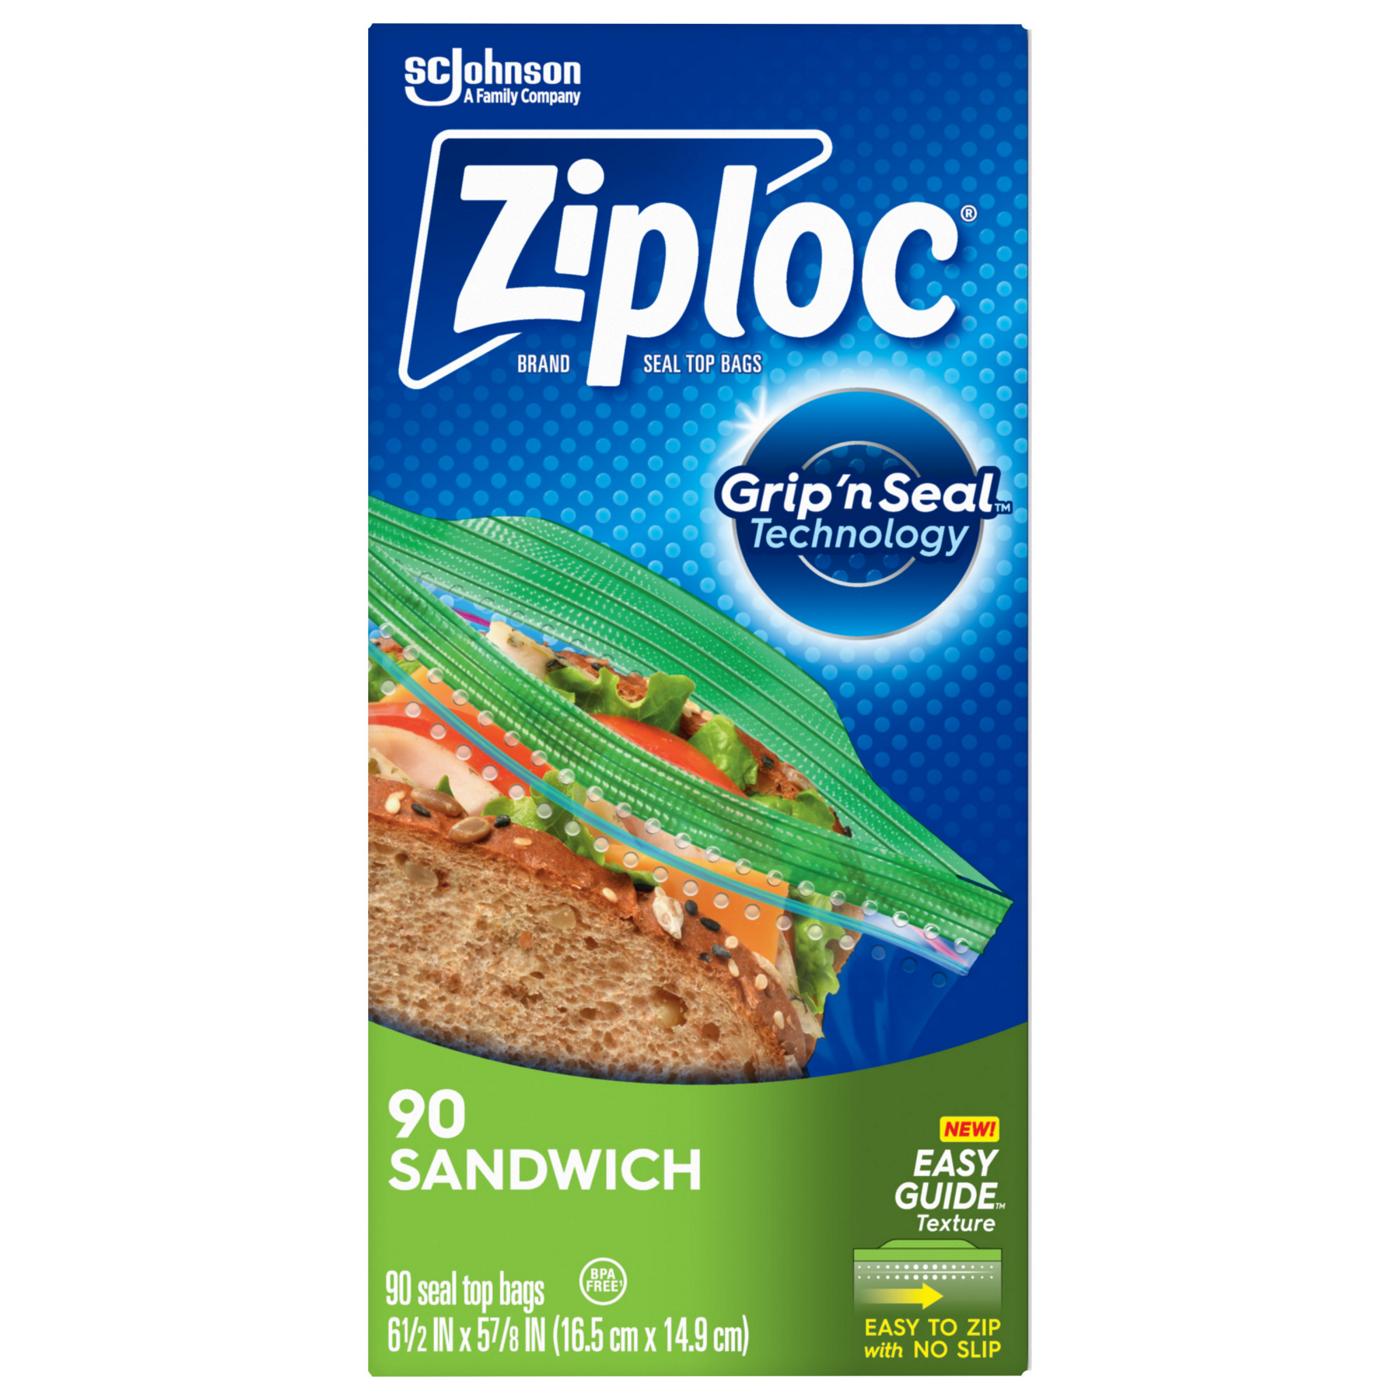 Ziploc Sandwich Bags with EasyGuide; image 3 of 6